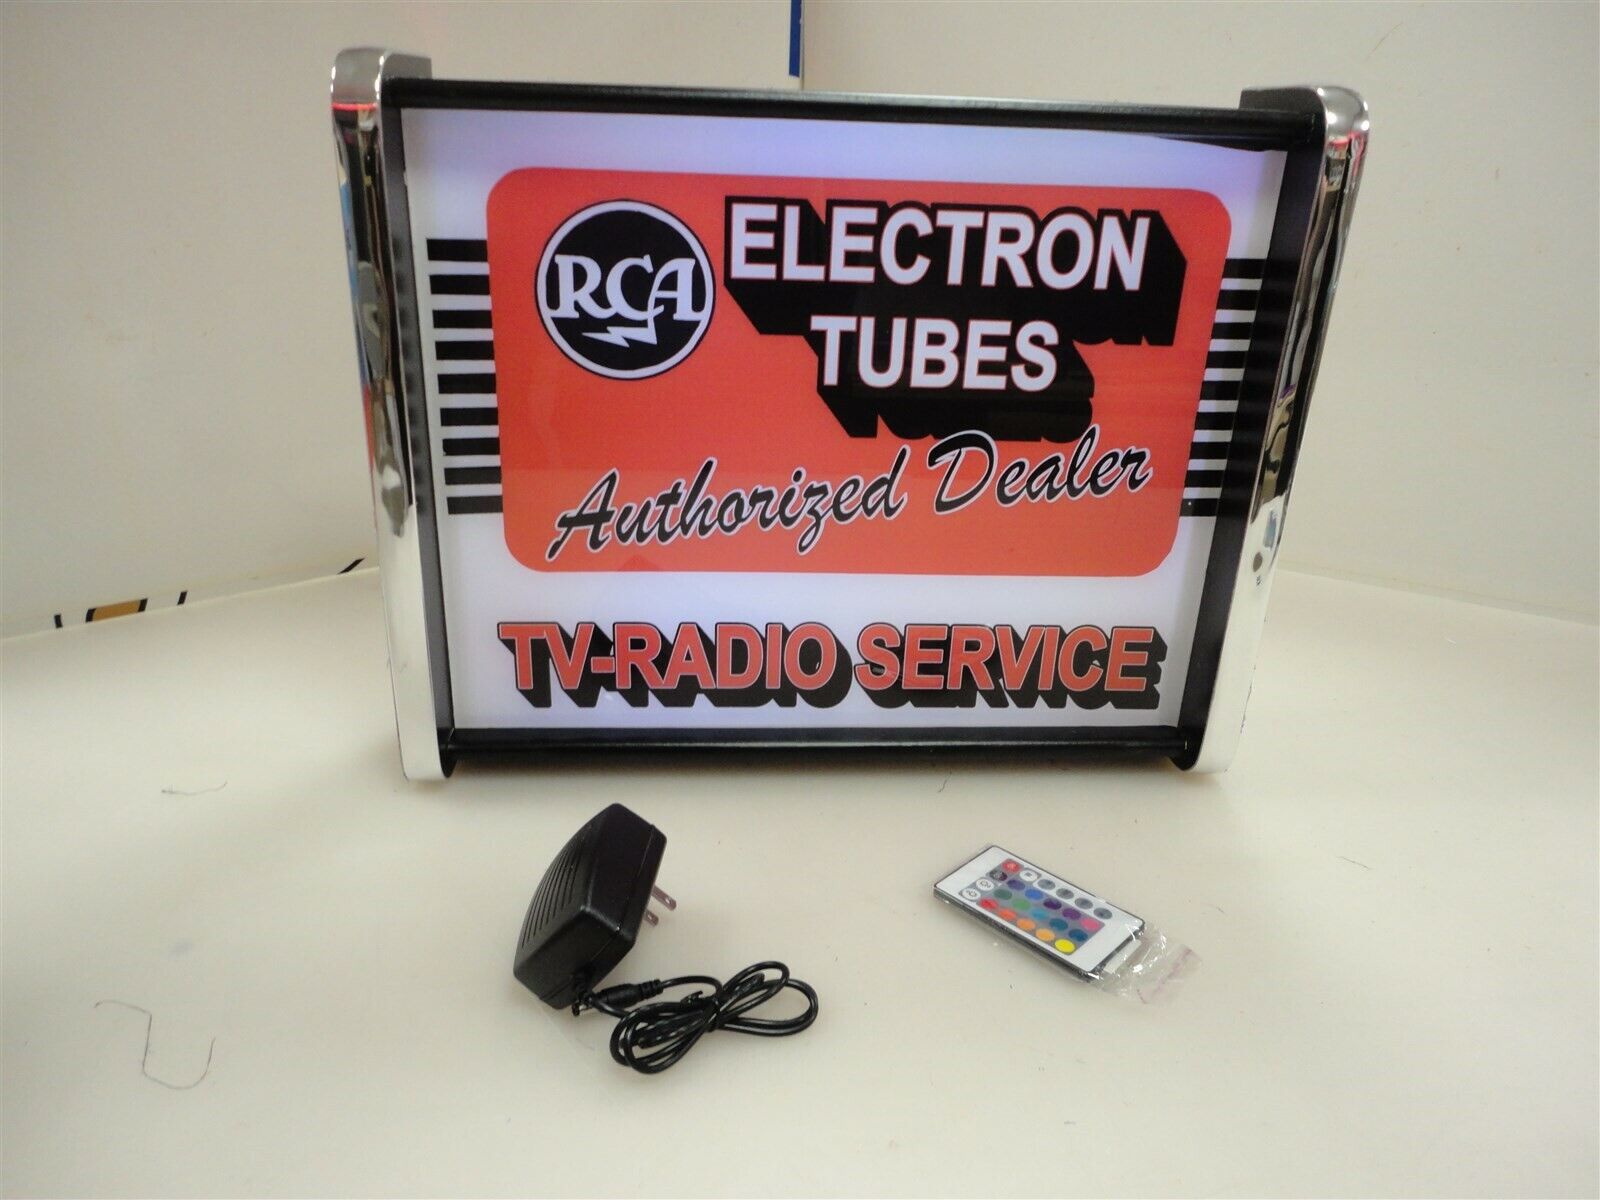 RCA Electron Tubes LED Display light sign box